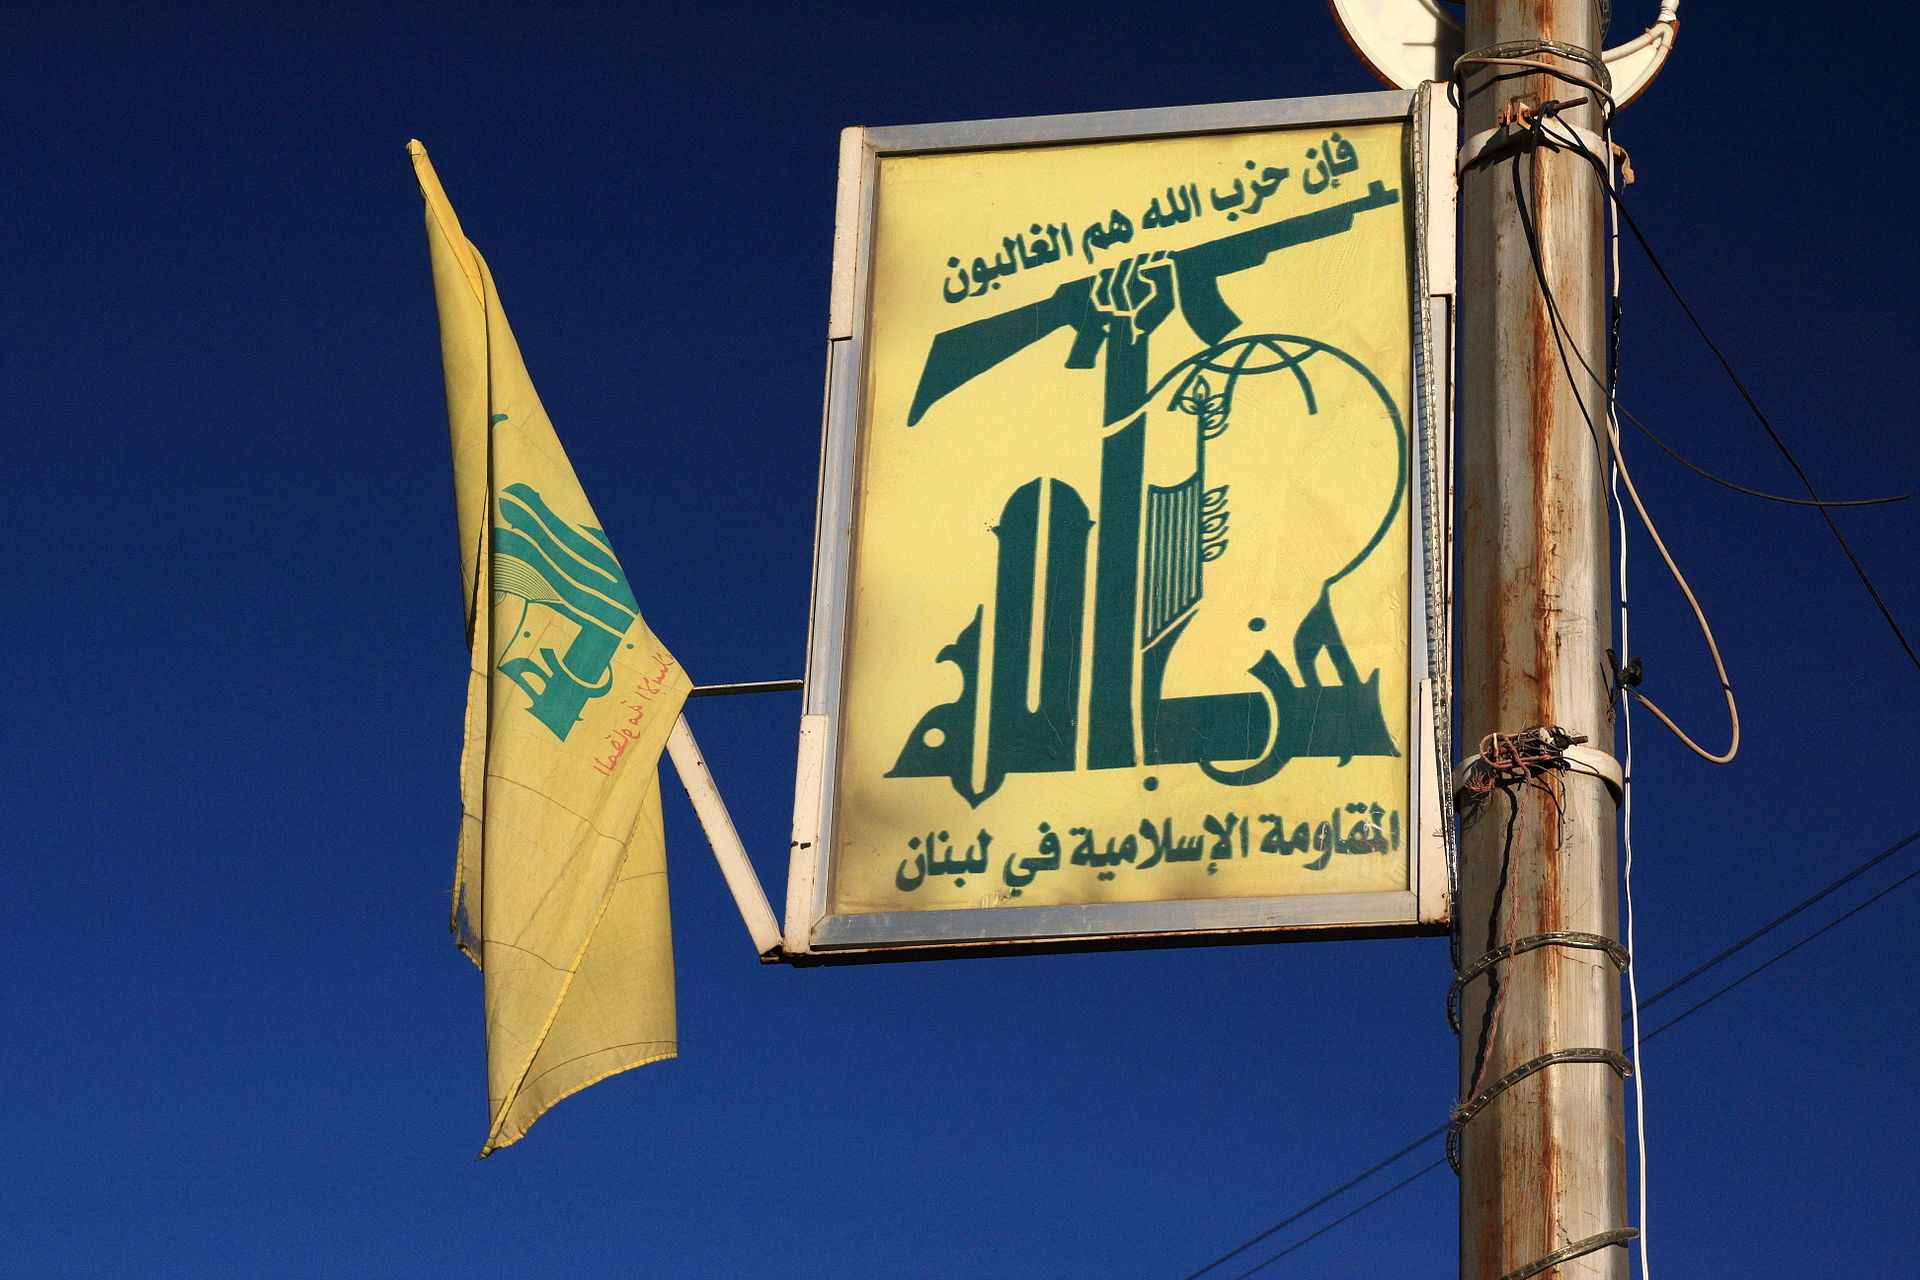 Hezbollah Signage in Baalbek, Lebanon